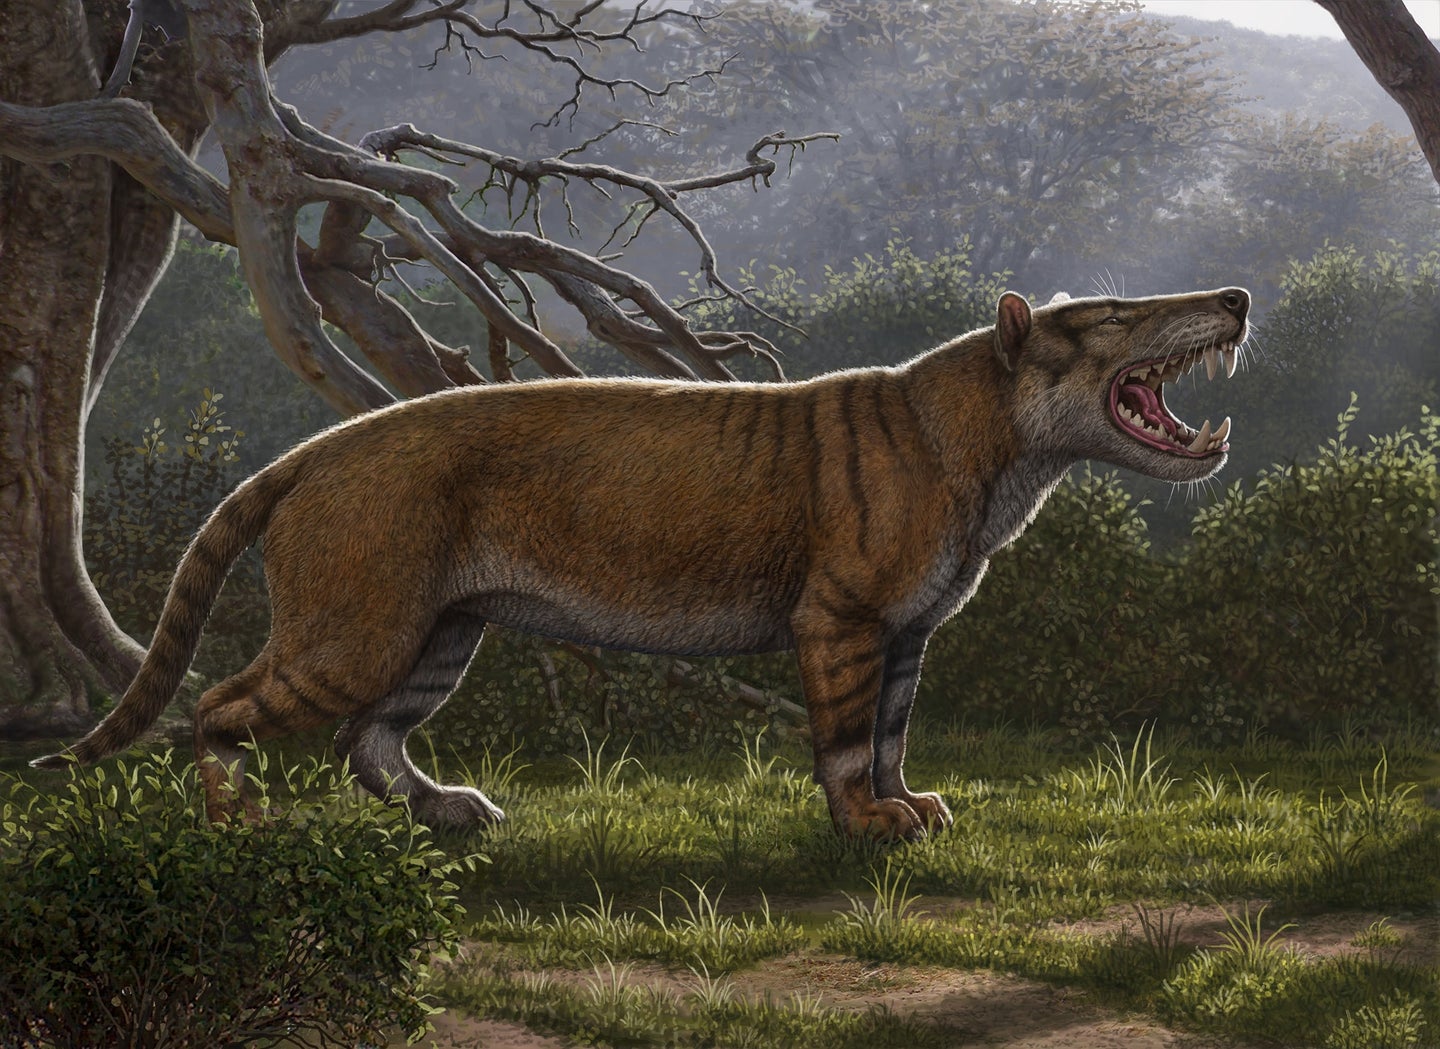 This ancient hypercarnivore had three sets of razor-sharp teeth